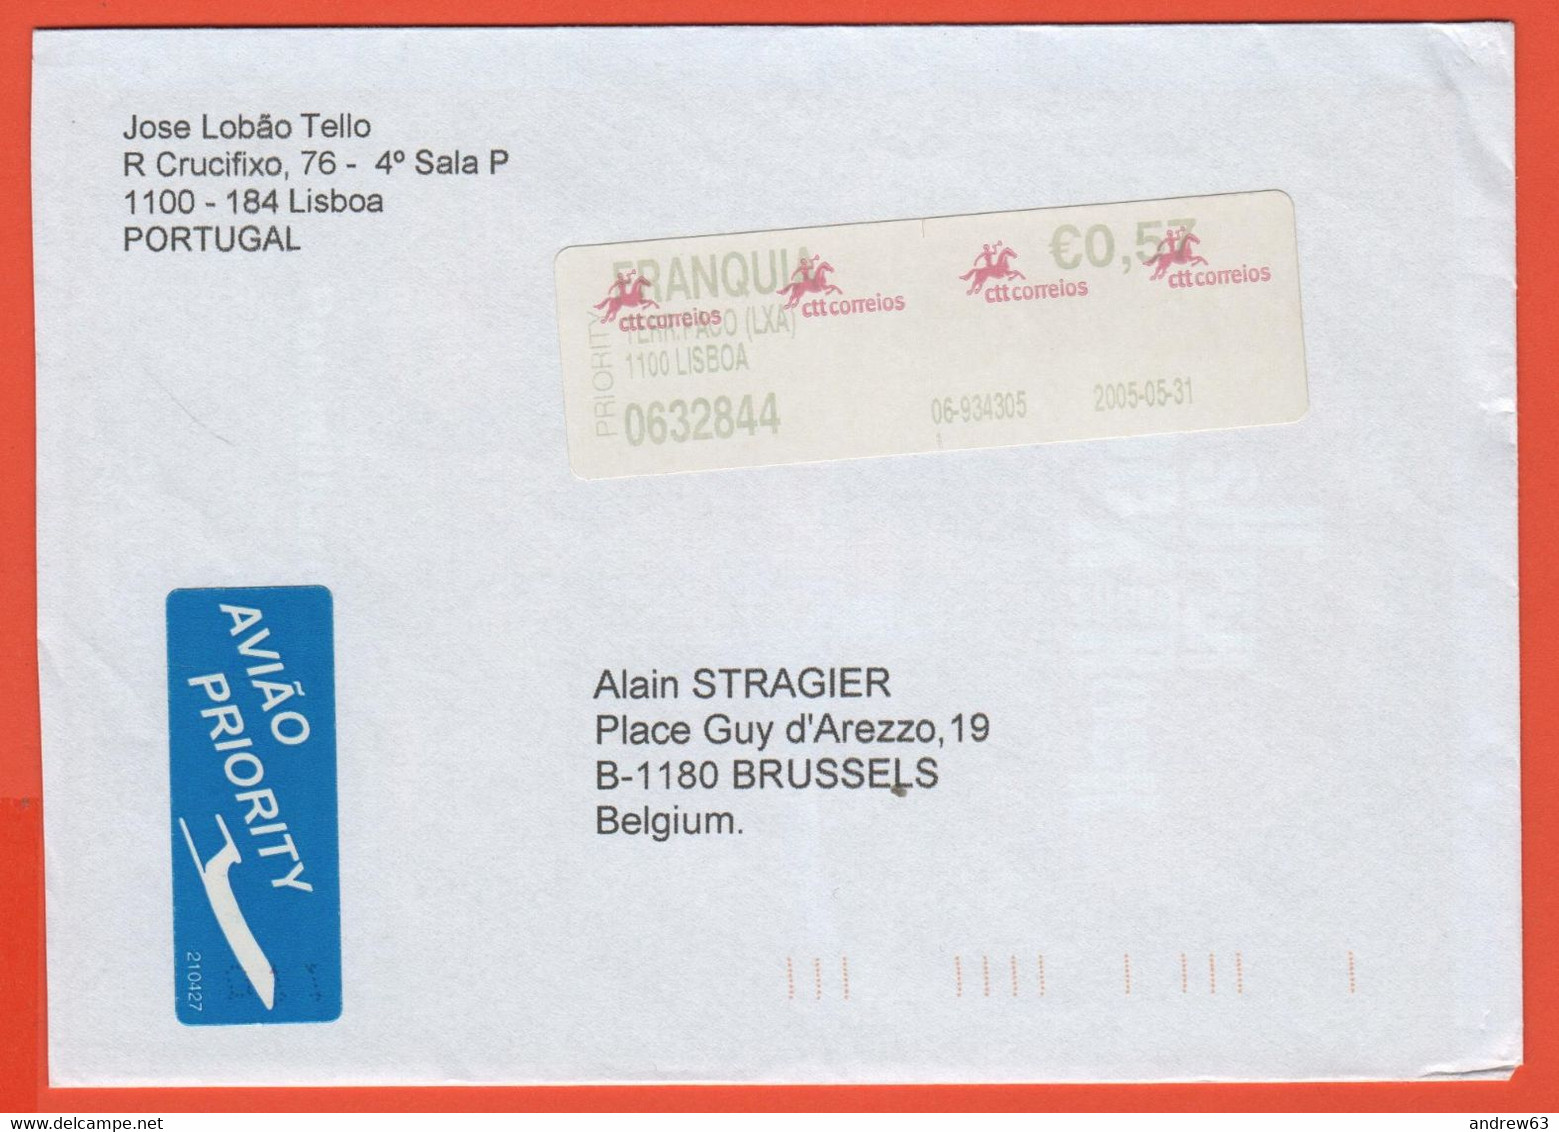 PORTOGALLO - PORTUGAL - 2005 - 0,57€ Postage Paid - Viaggiata Da Lisboa Per Bruxelles, Belgium - Briefe U. Dokumente